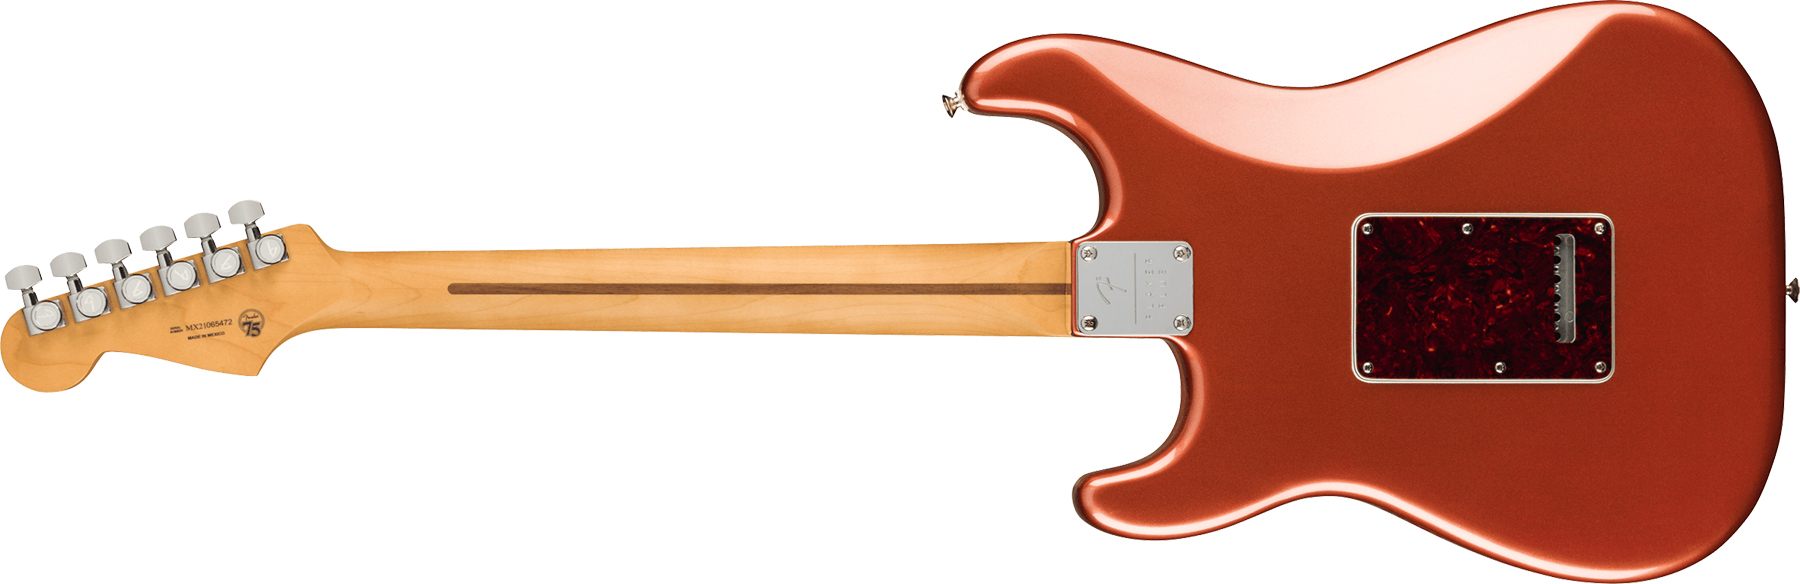 Fender Strat Player Plus Mex 3s Trem Pf - Aged Candy Apple Red - Str shape electric guitar - Variation 1